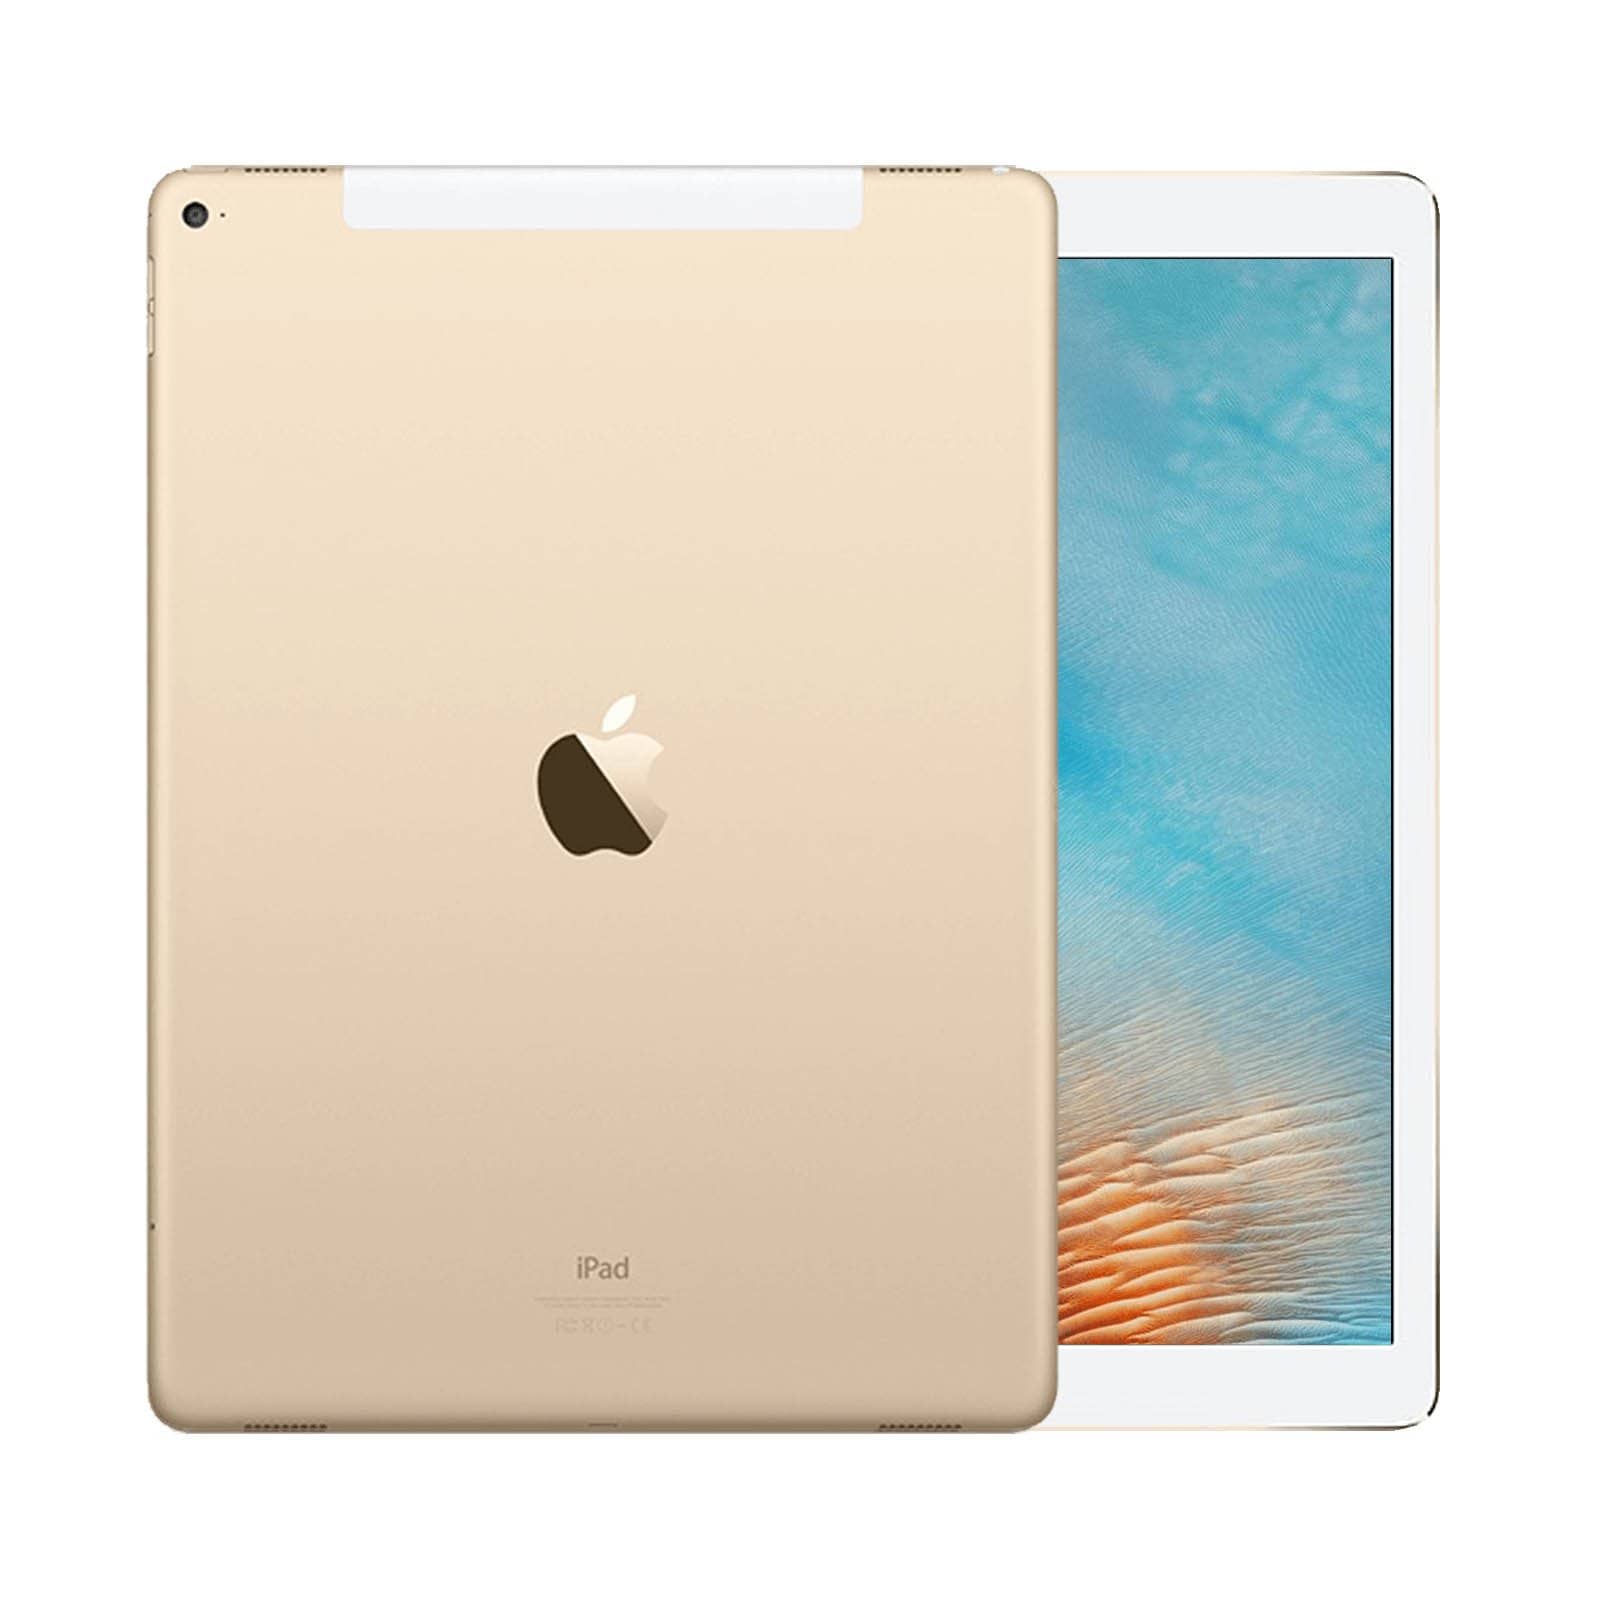 iPad Pro 12.9 Inch 1st Gen 128GB Gold Good - Unlocked 128GB Gold Good